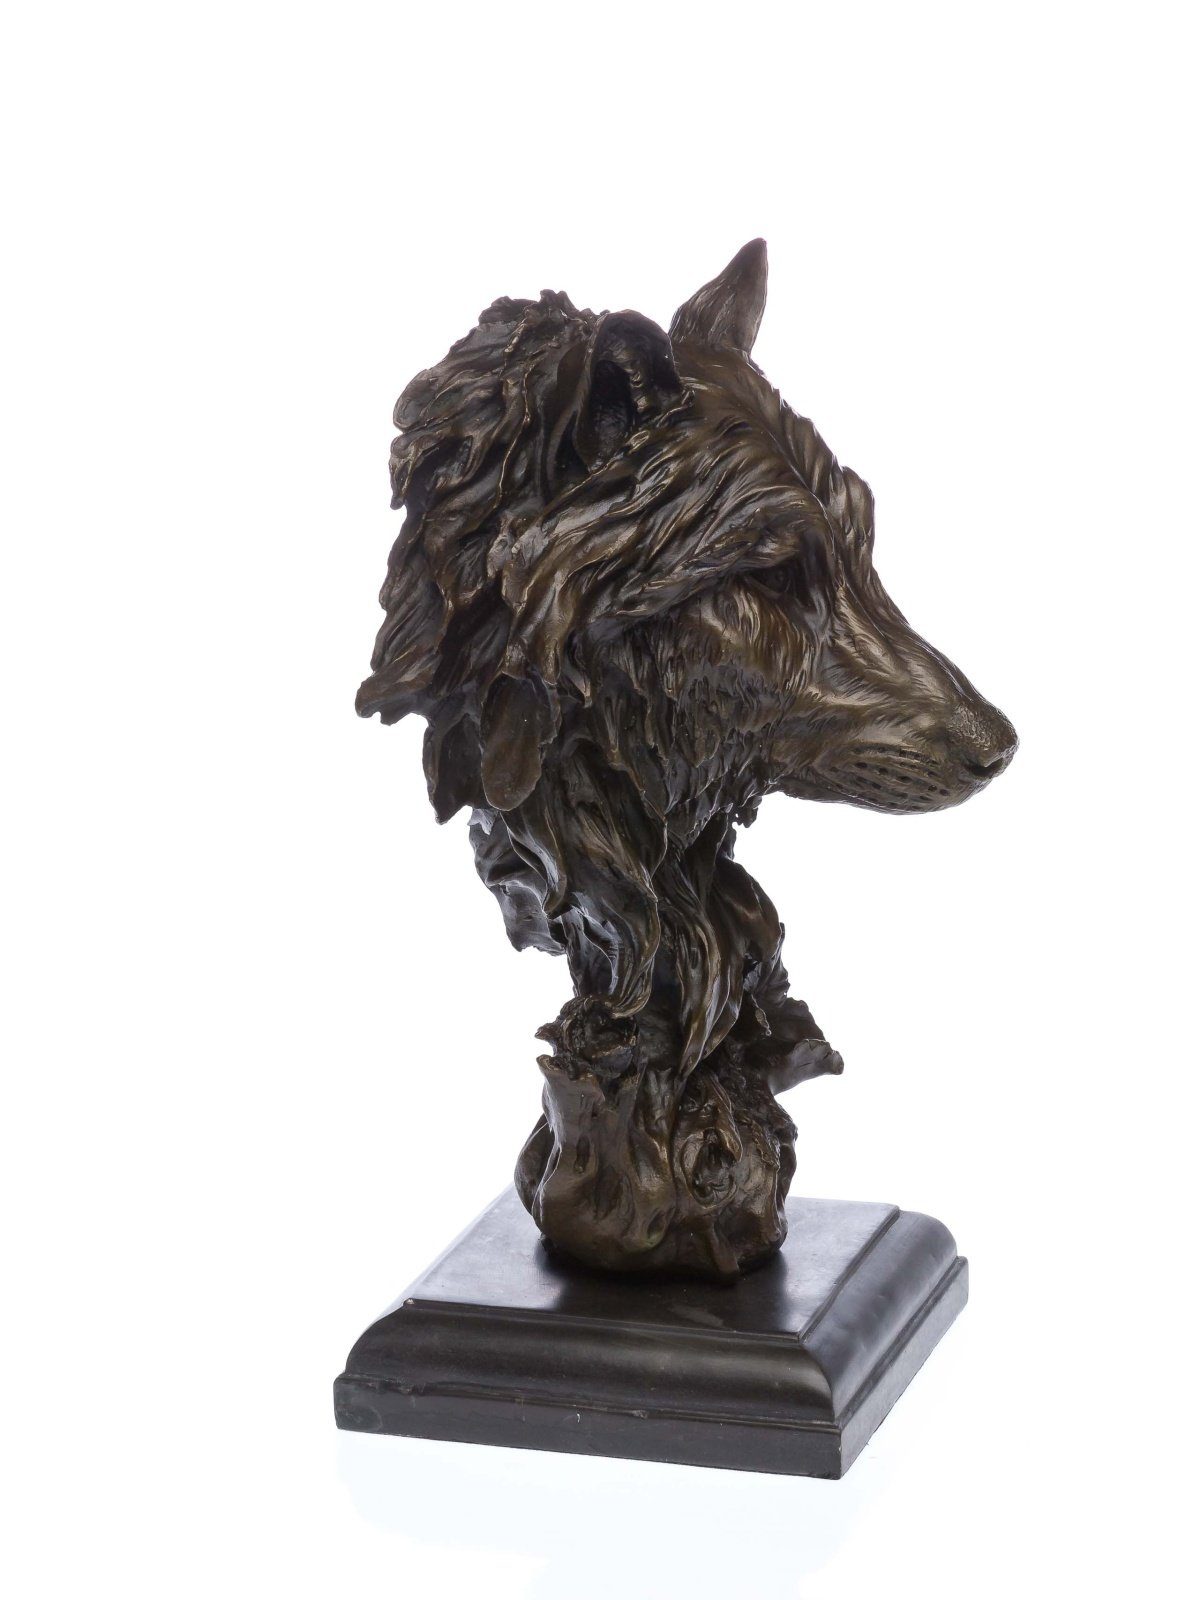 Aubaho Skulptur Bronzeskulptur Büste Wolf Bronze Figur Skulptur 37cm Kunst Antik-Stil